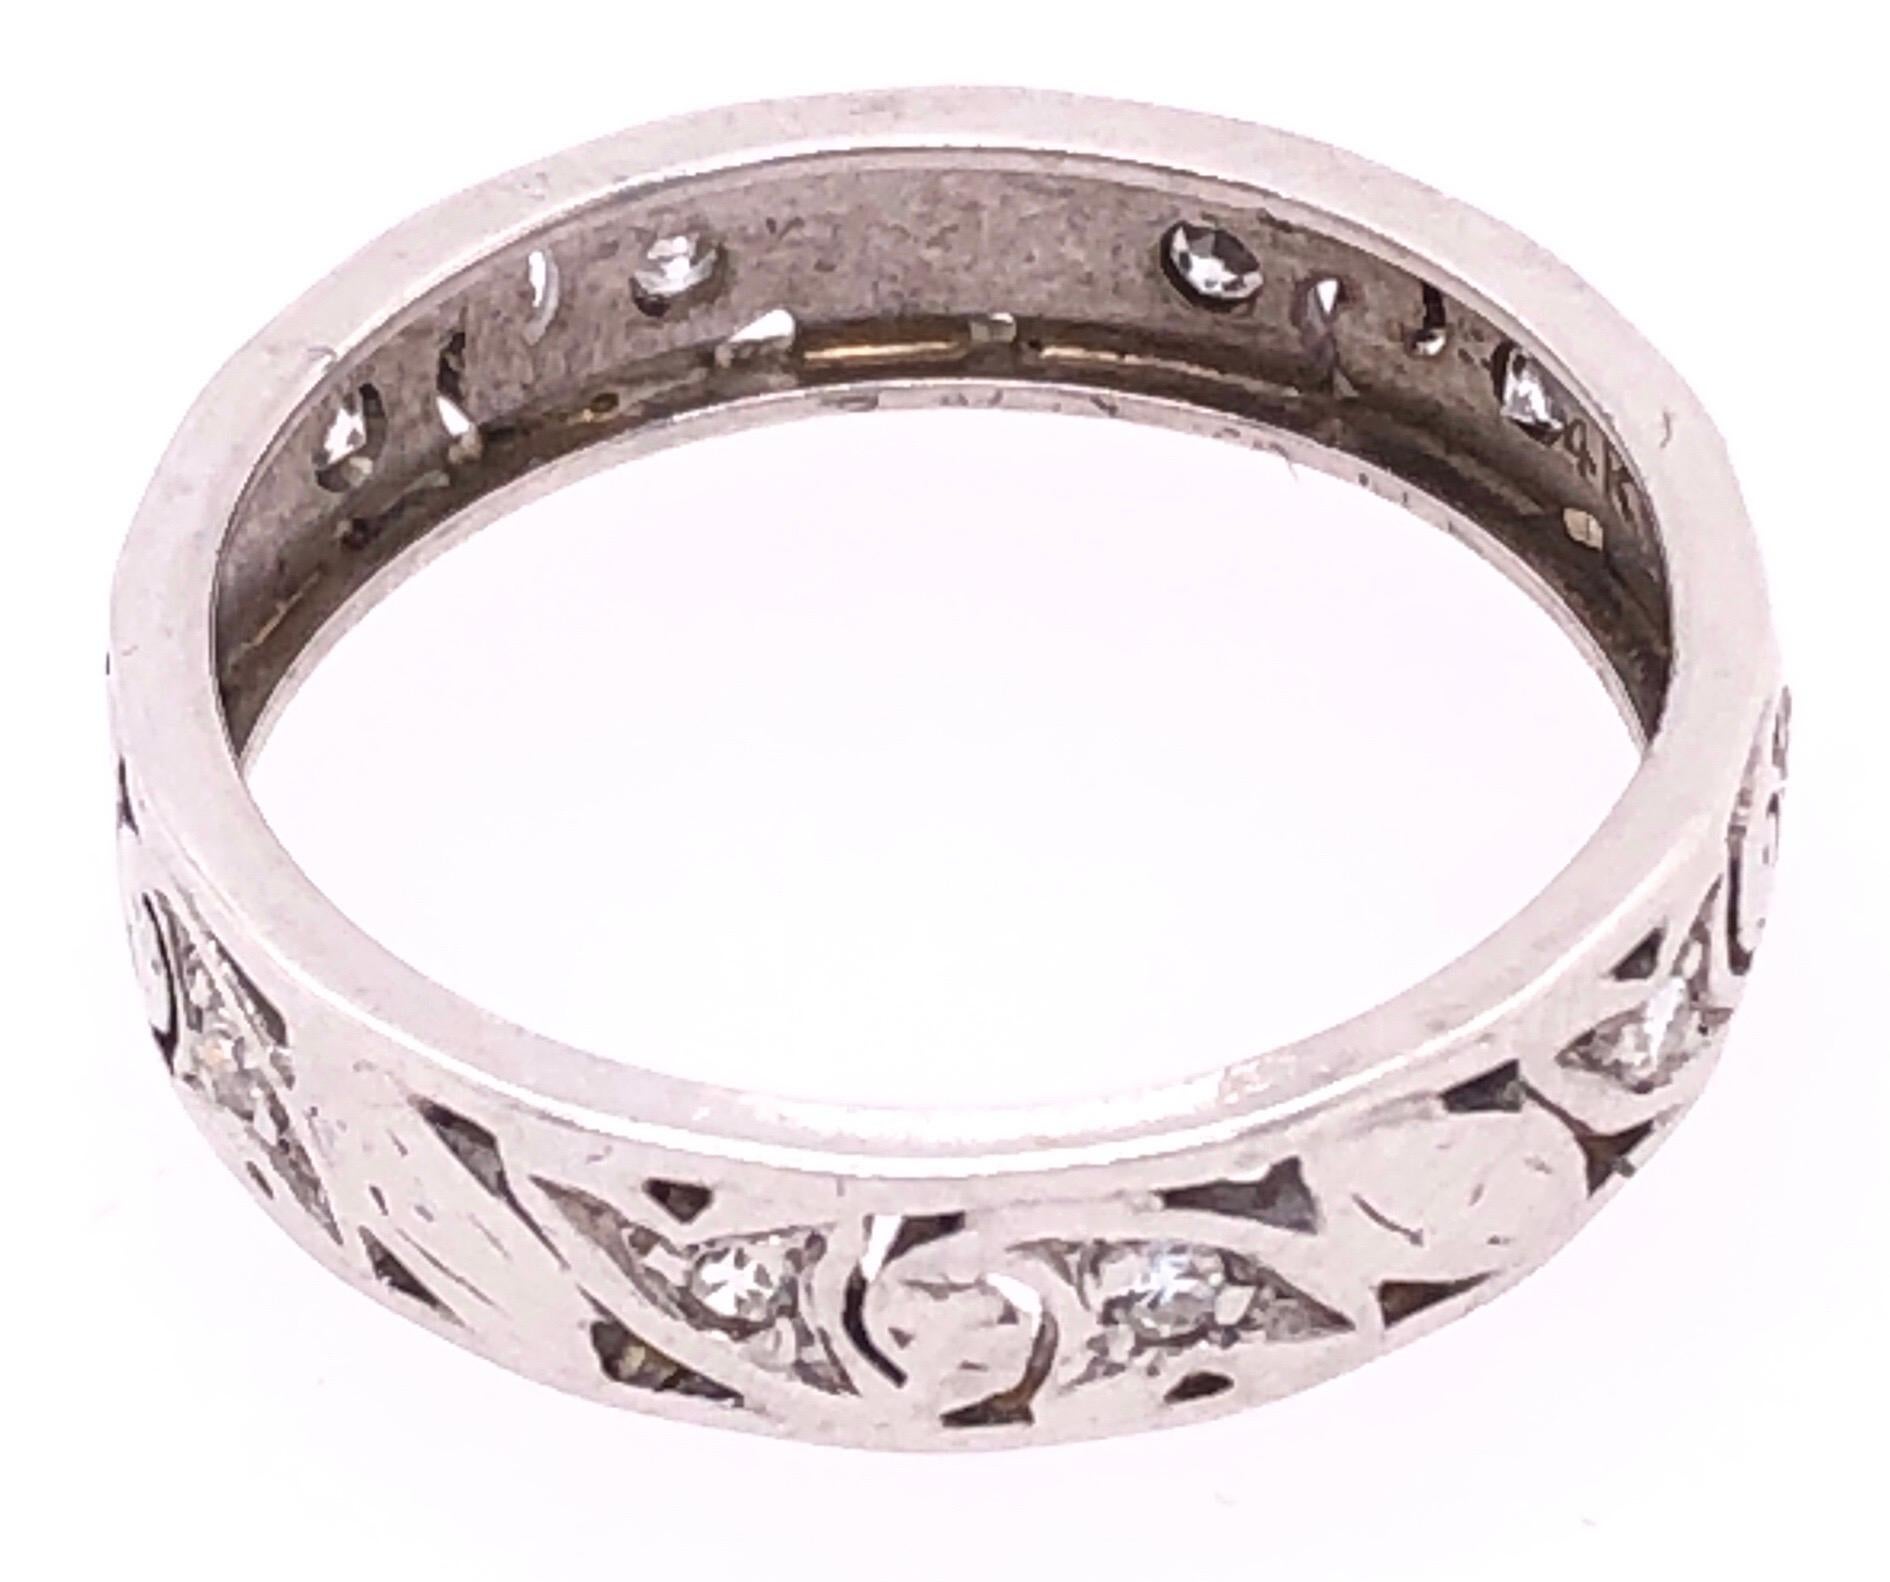 14 Karat White Gold Scroll Design Eternity Diamond Band Ring Size 8 .
0.42 total diamond weight.
2.77 grams total weight.